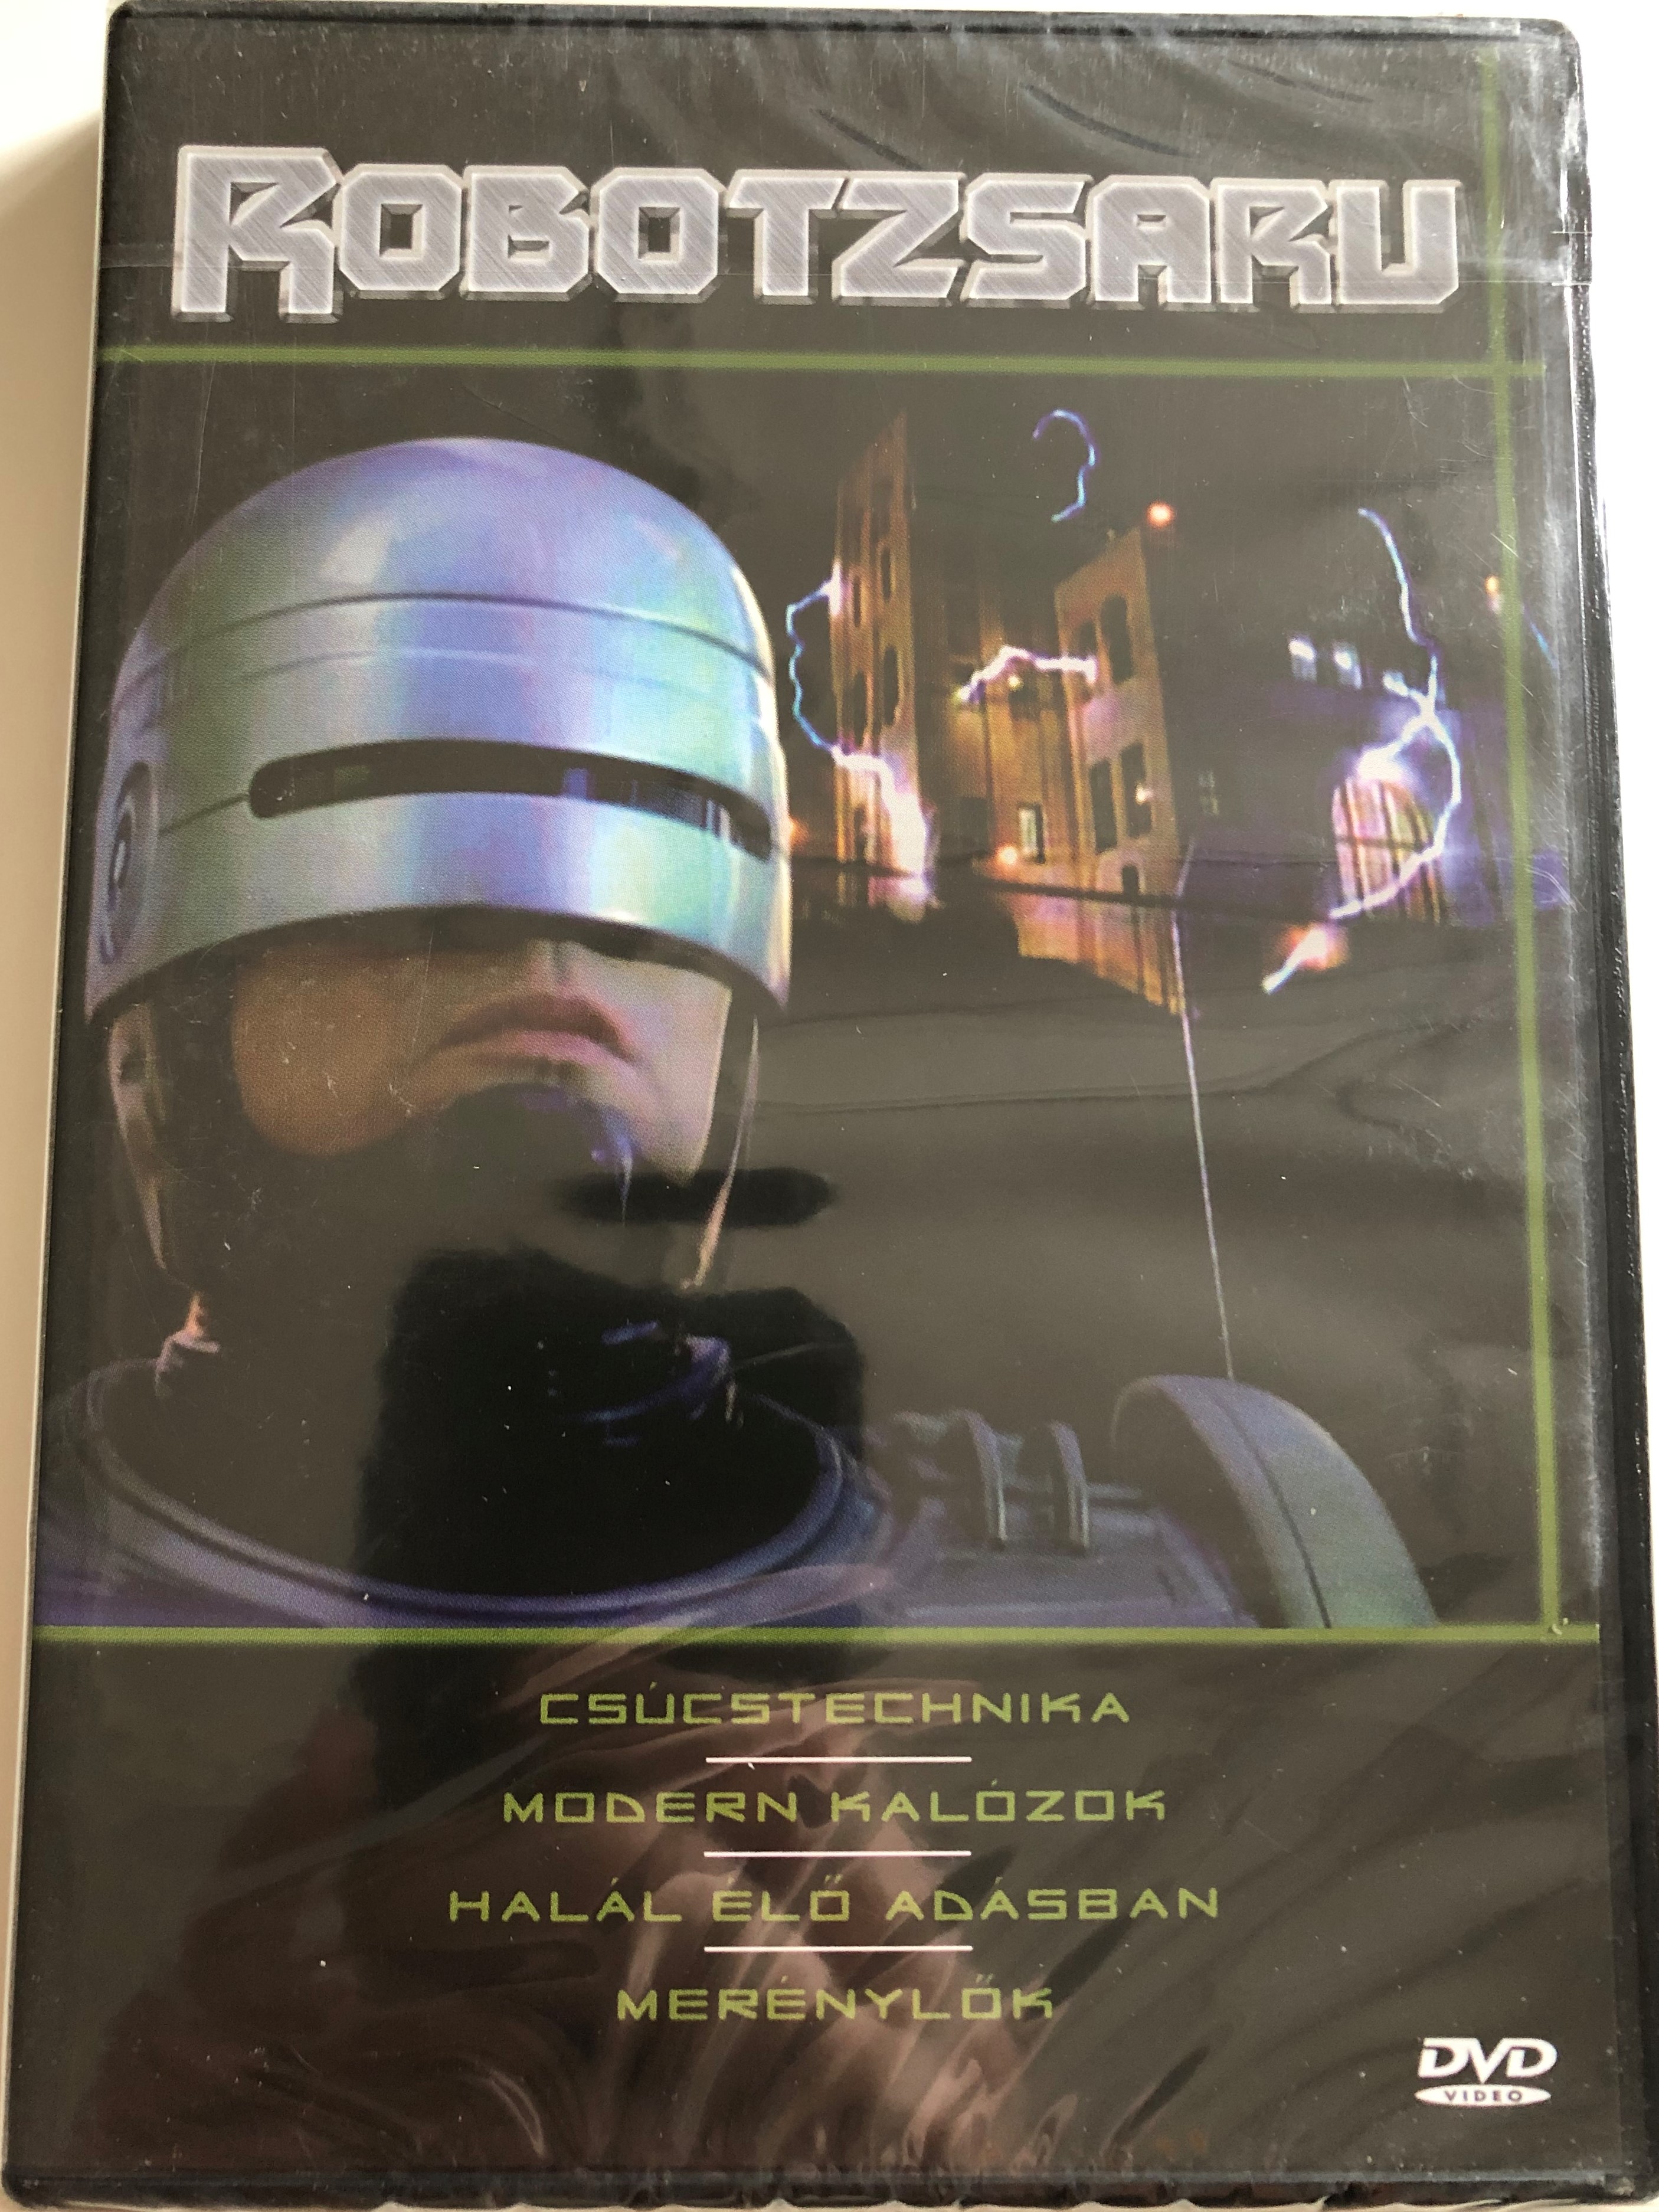 robocop-dvd-1994-robotzsaru-tv-series-created-by-michael-miner-edward-neumeier-starring-richard-eden-yvette-nipar-disc-6-4-episodes-5999882941356-.jpg